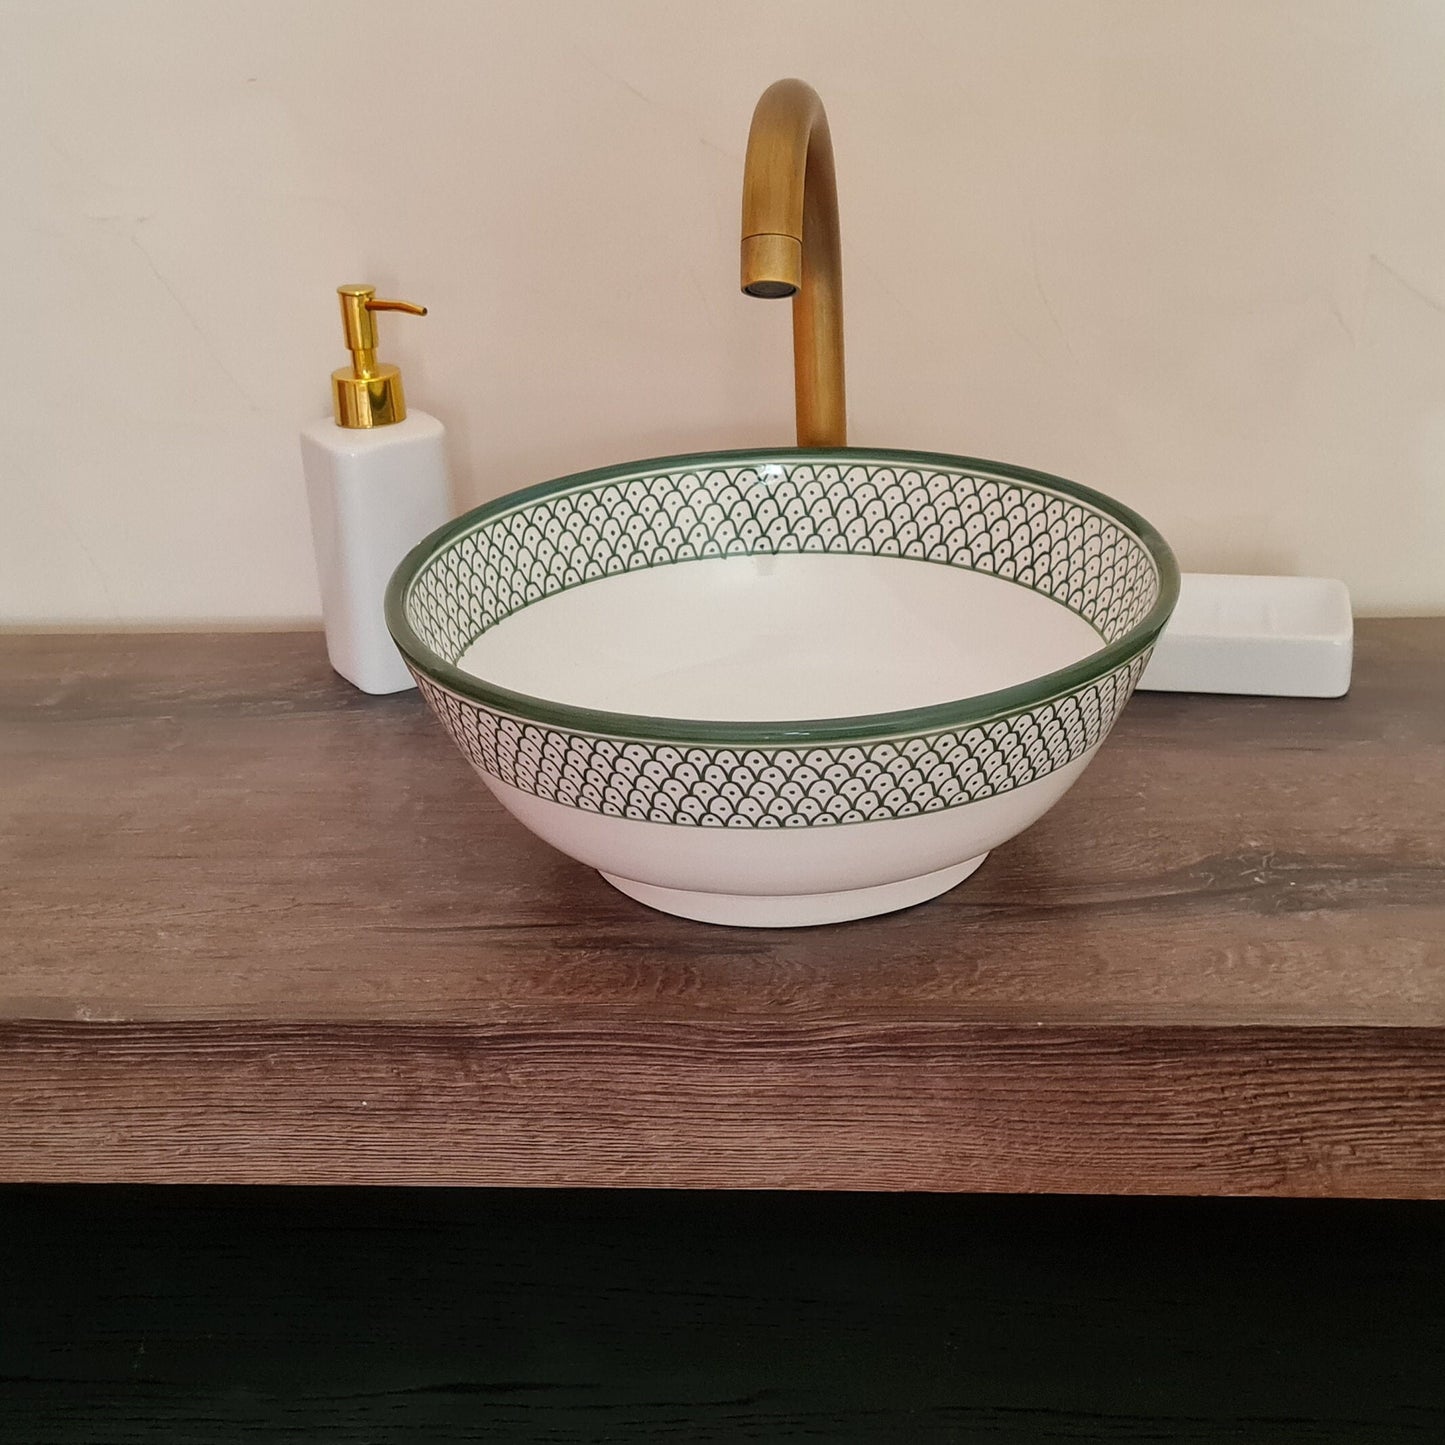 Moroccan sink | moroccan ceramic sink | bathroom sink | moroccan bathroom basin | cloakroom basin | Green sink #177